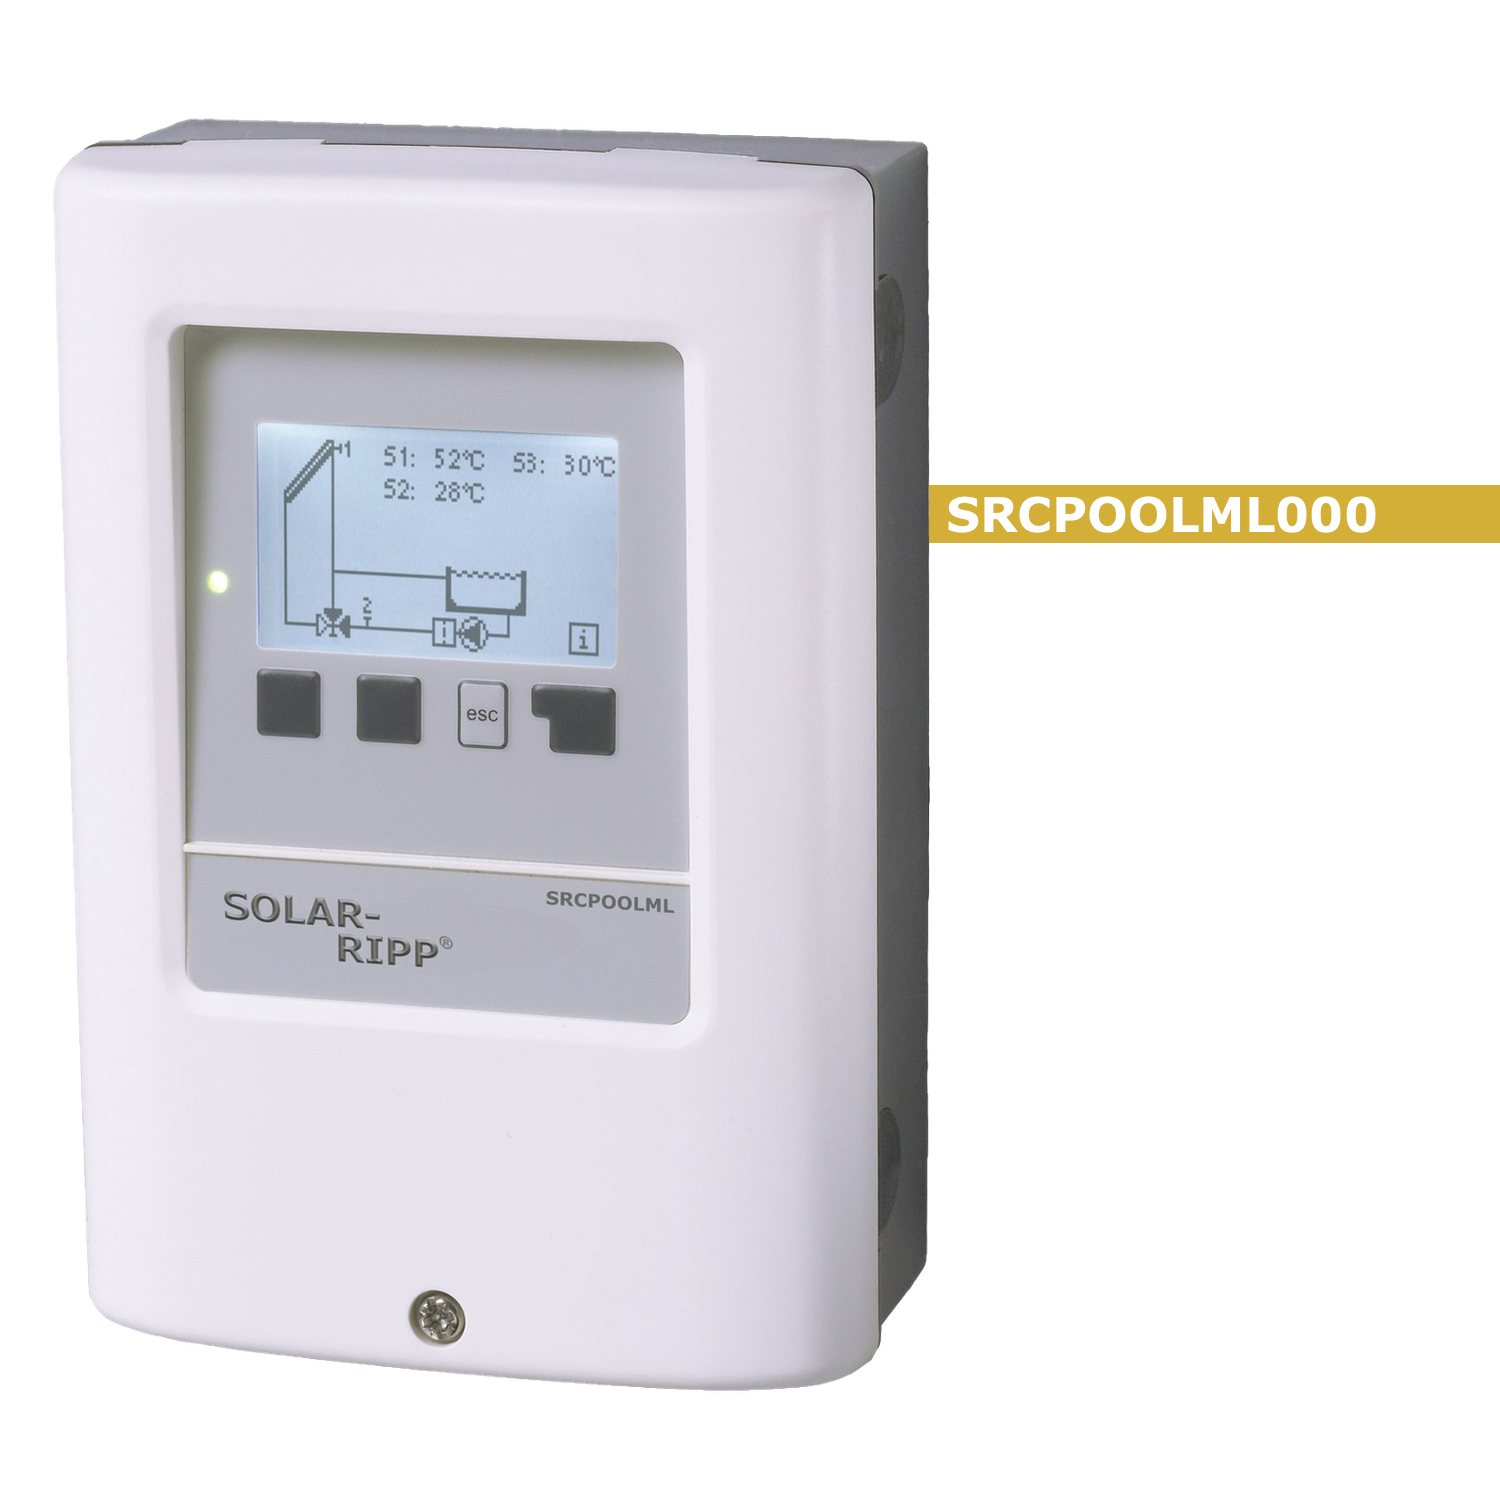 SOLAR-RIPP ® Solarcontroller SRCPOOLML000